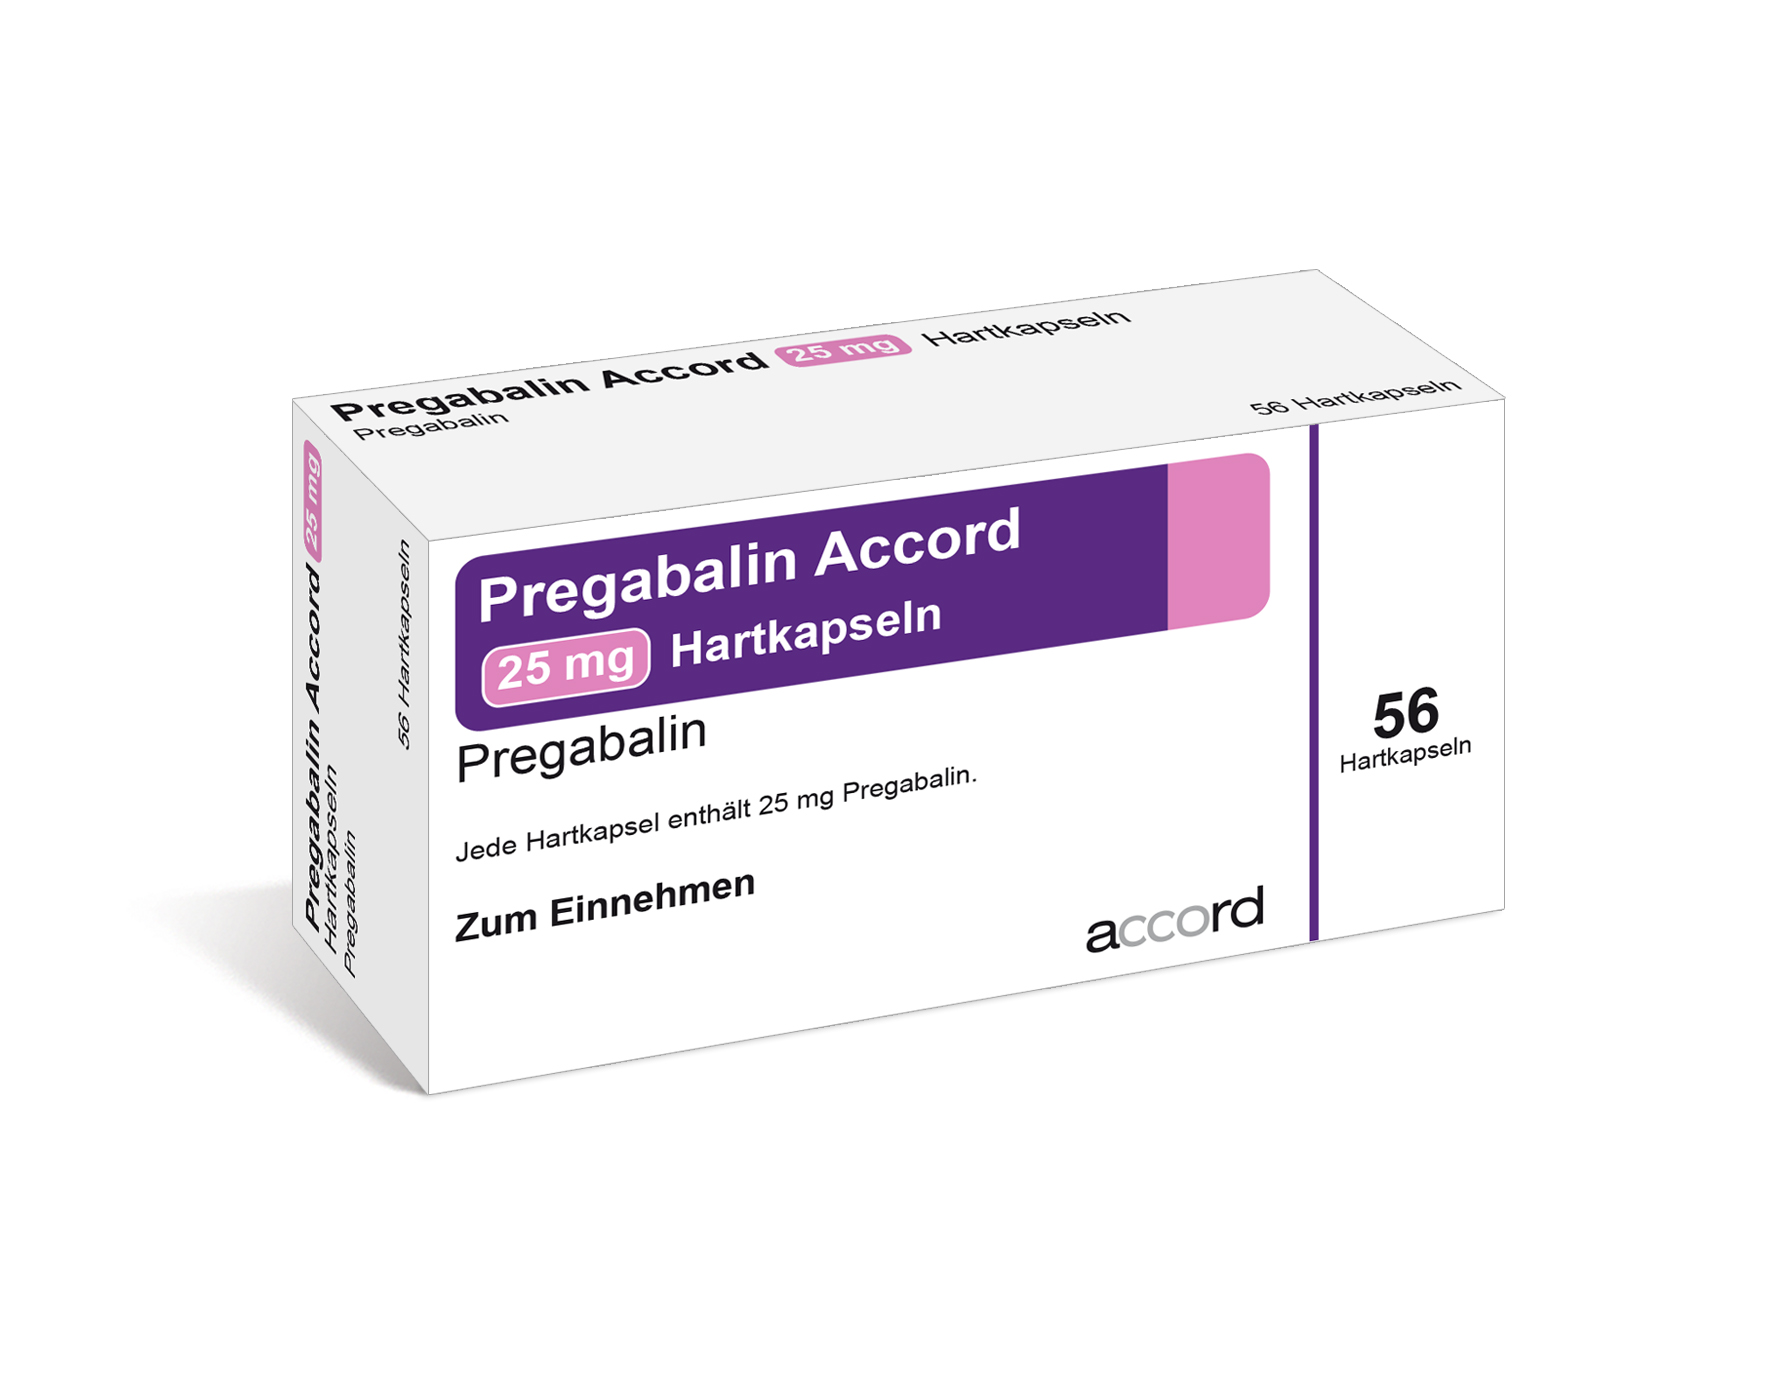 Accord Packshot Pregabalin 25 mg